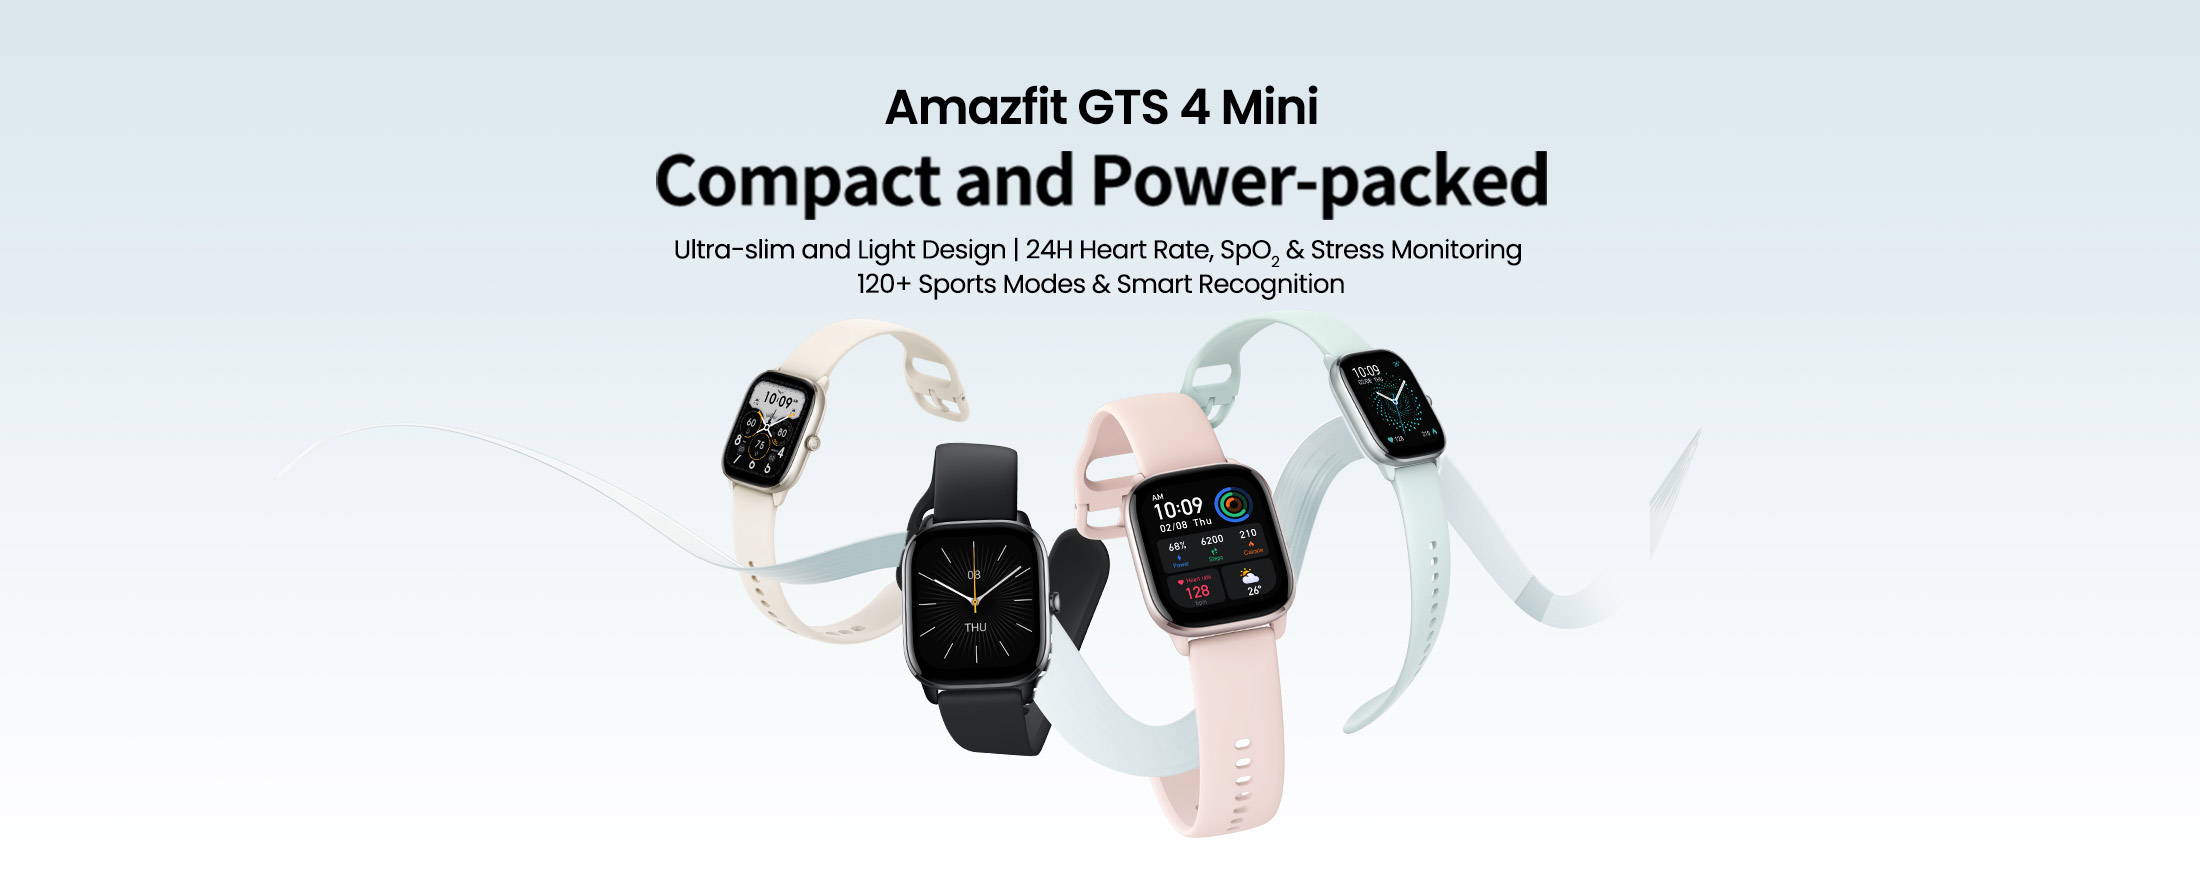 Buy Amazfit GTS 4 Mini Smart Watch @ ₹7999.0